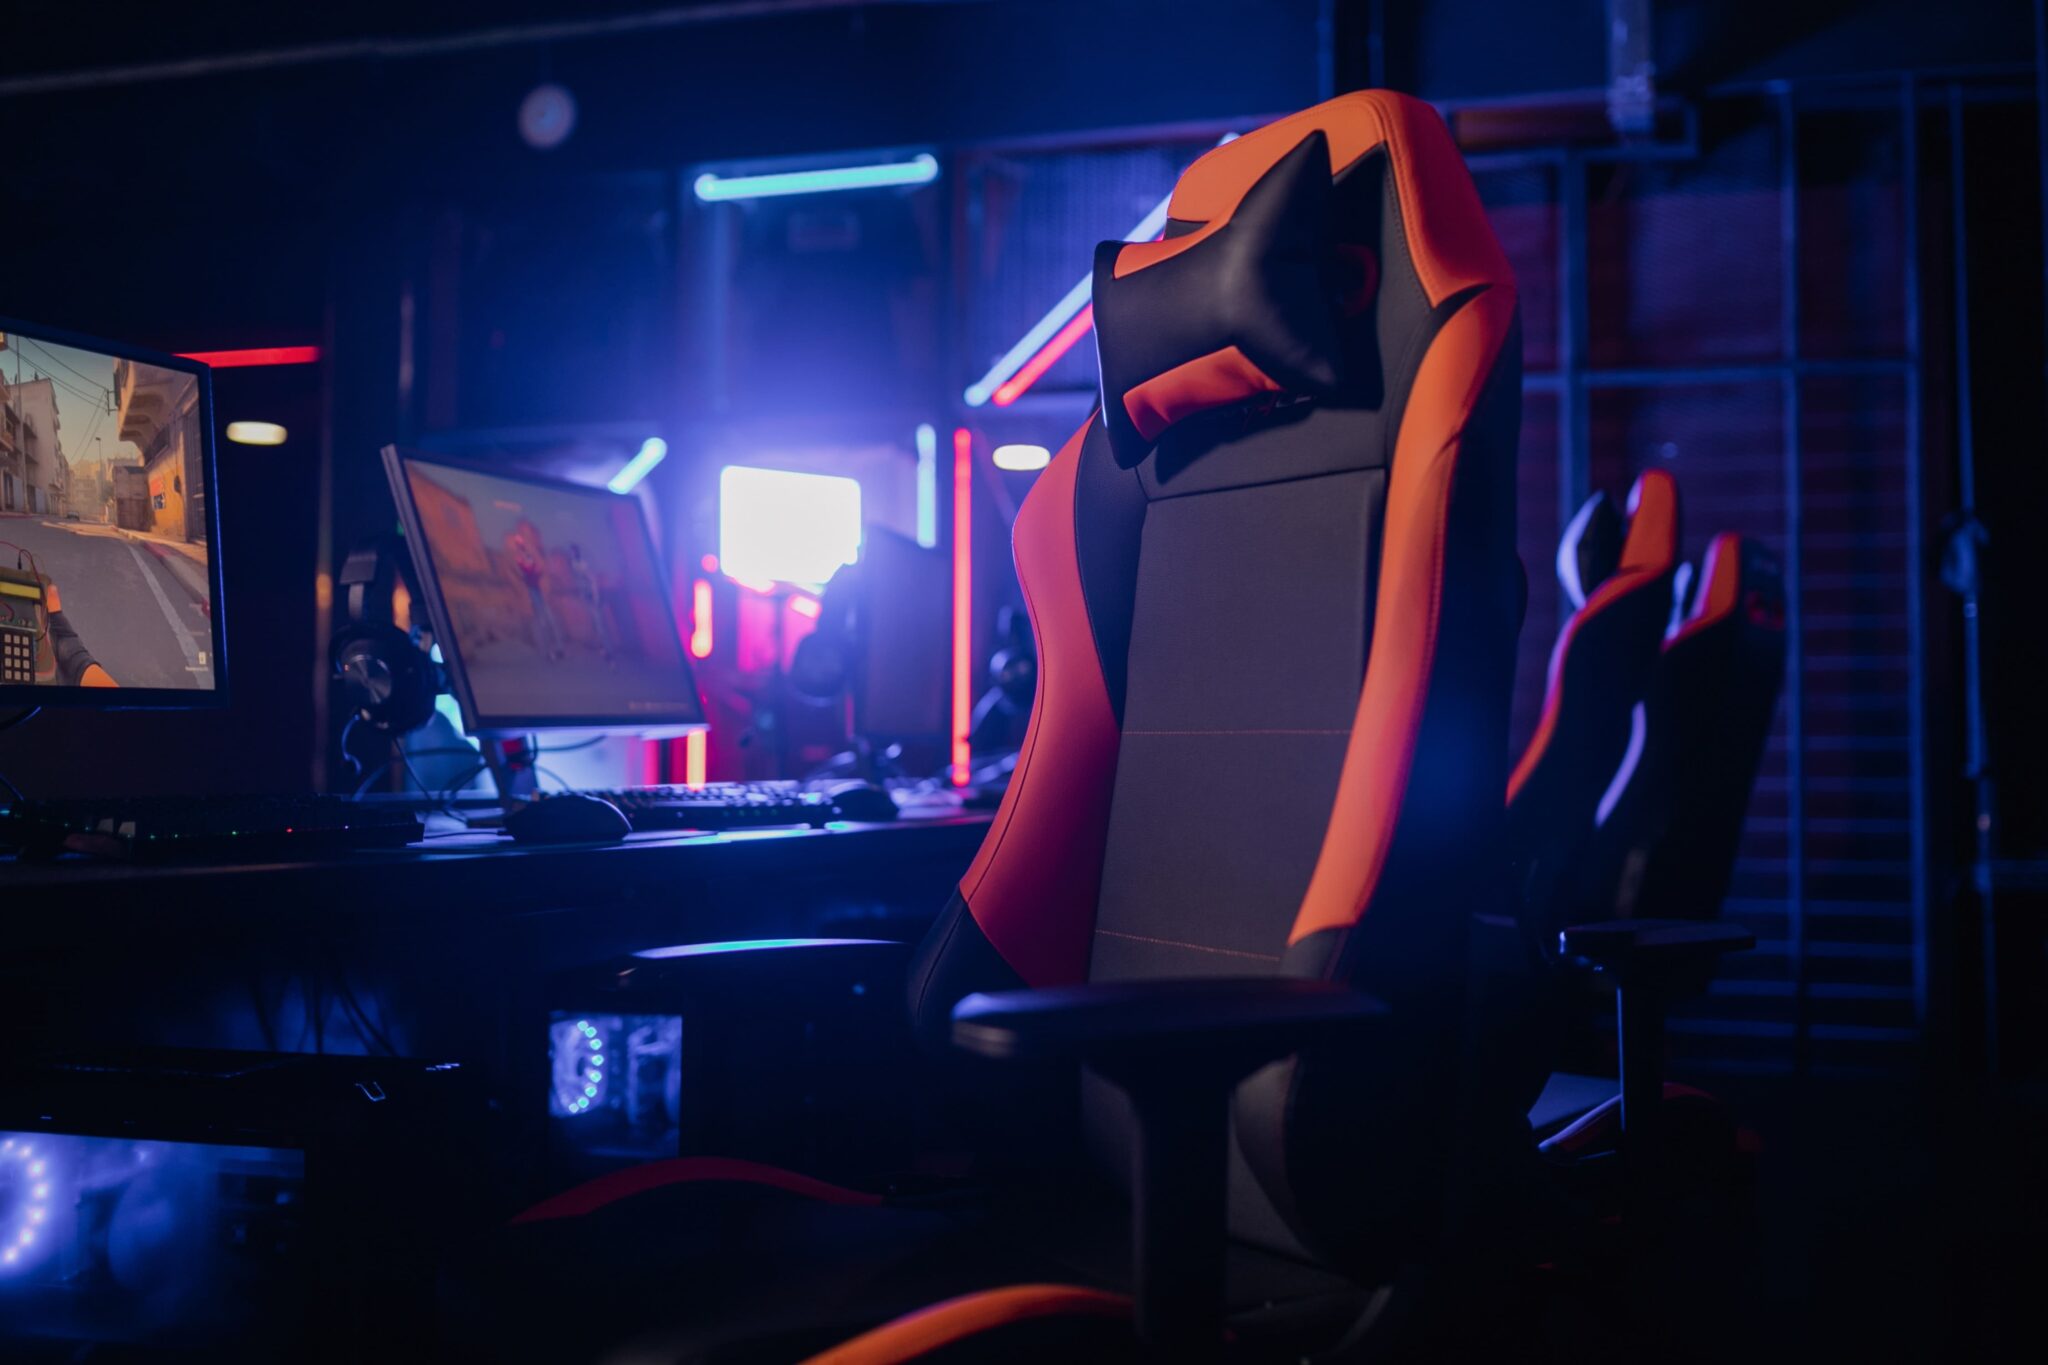 respawn gaming chair